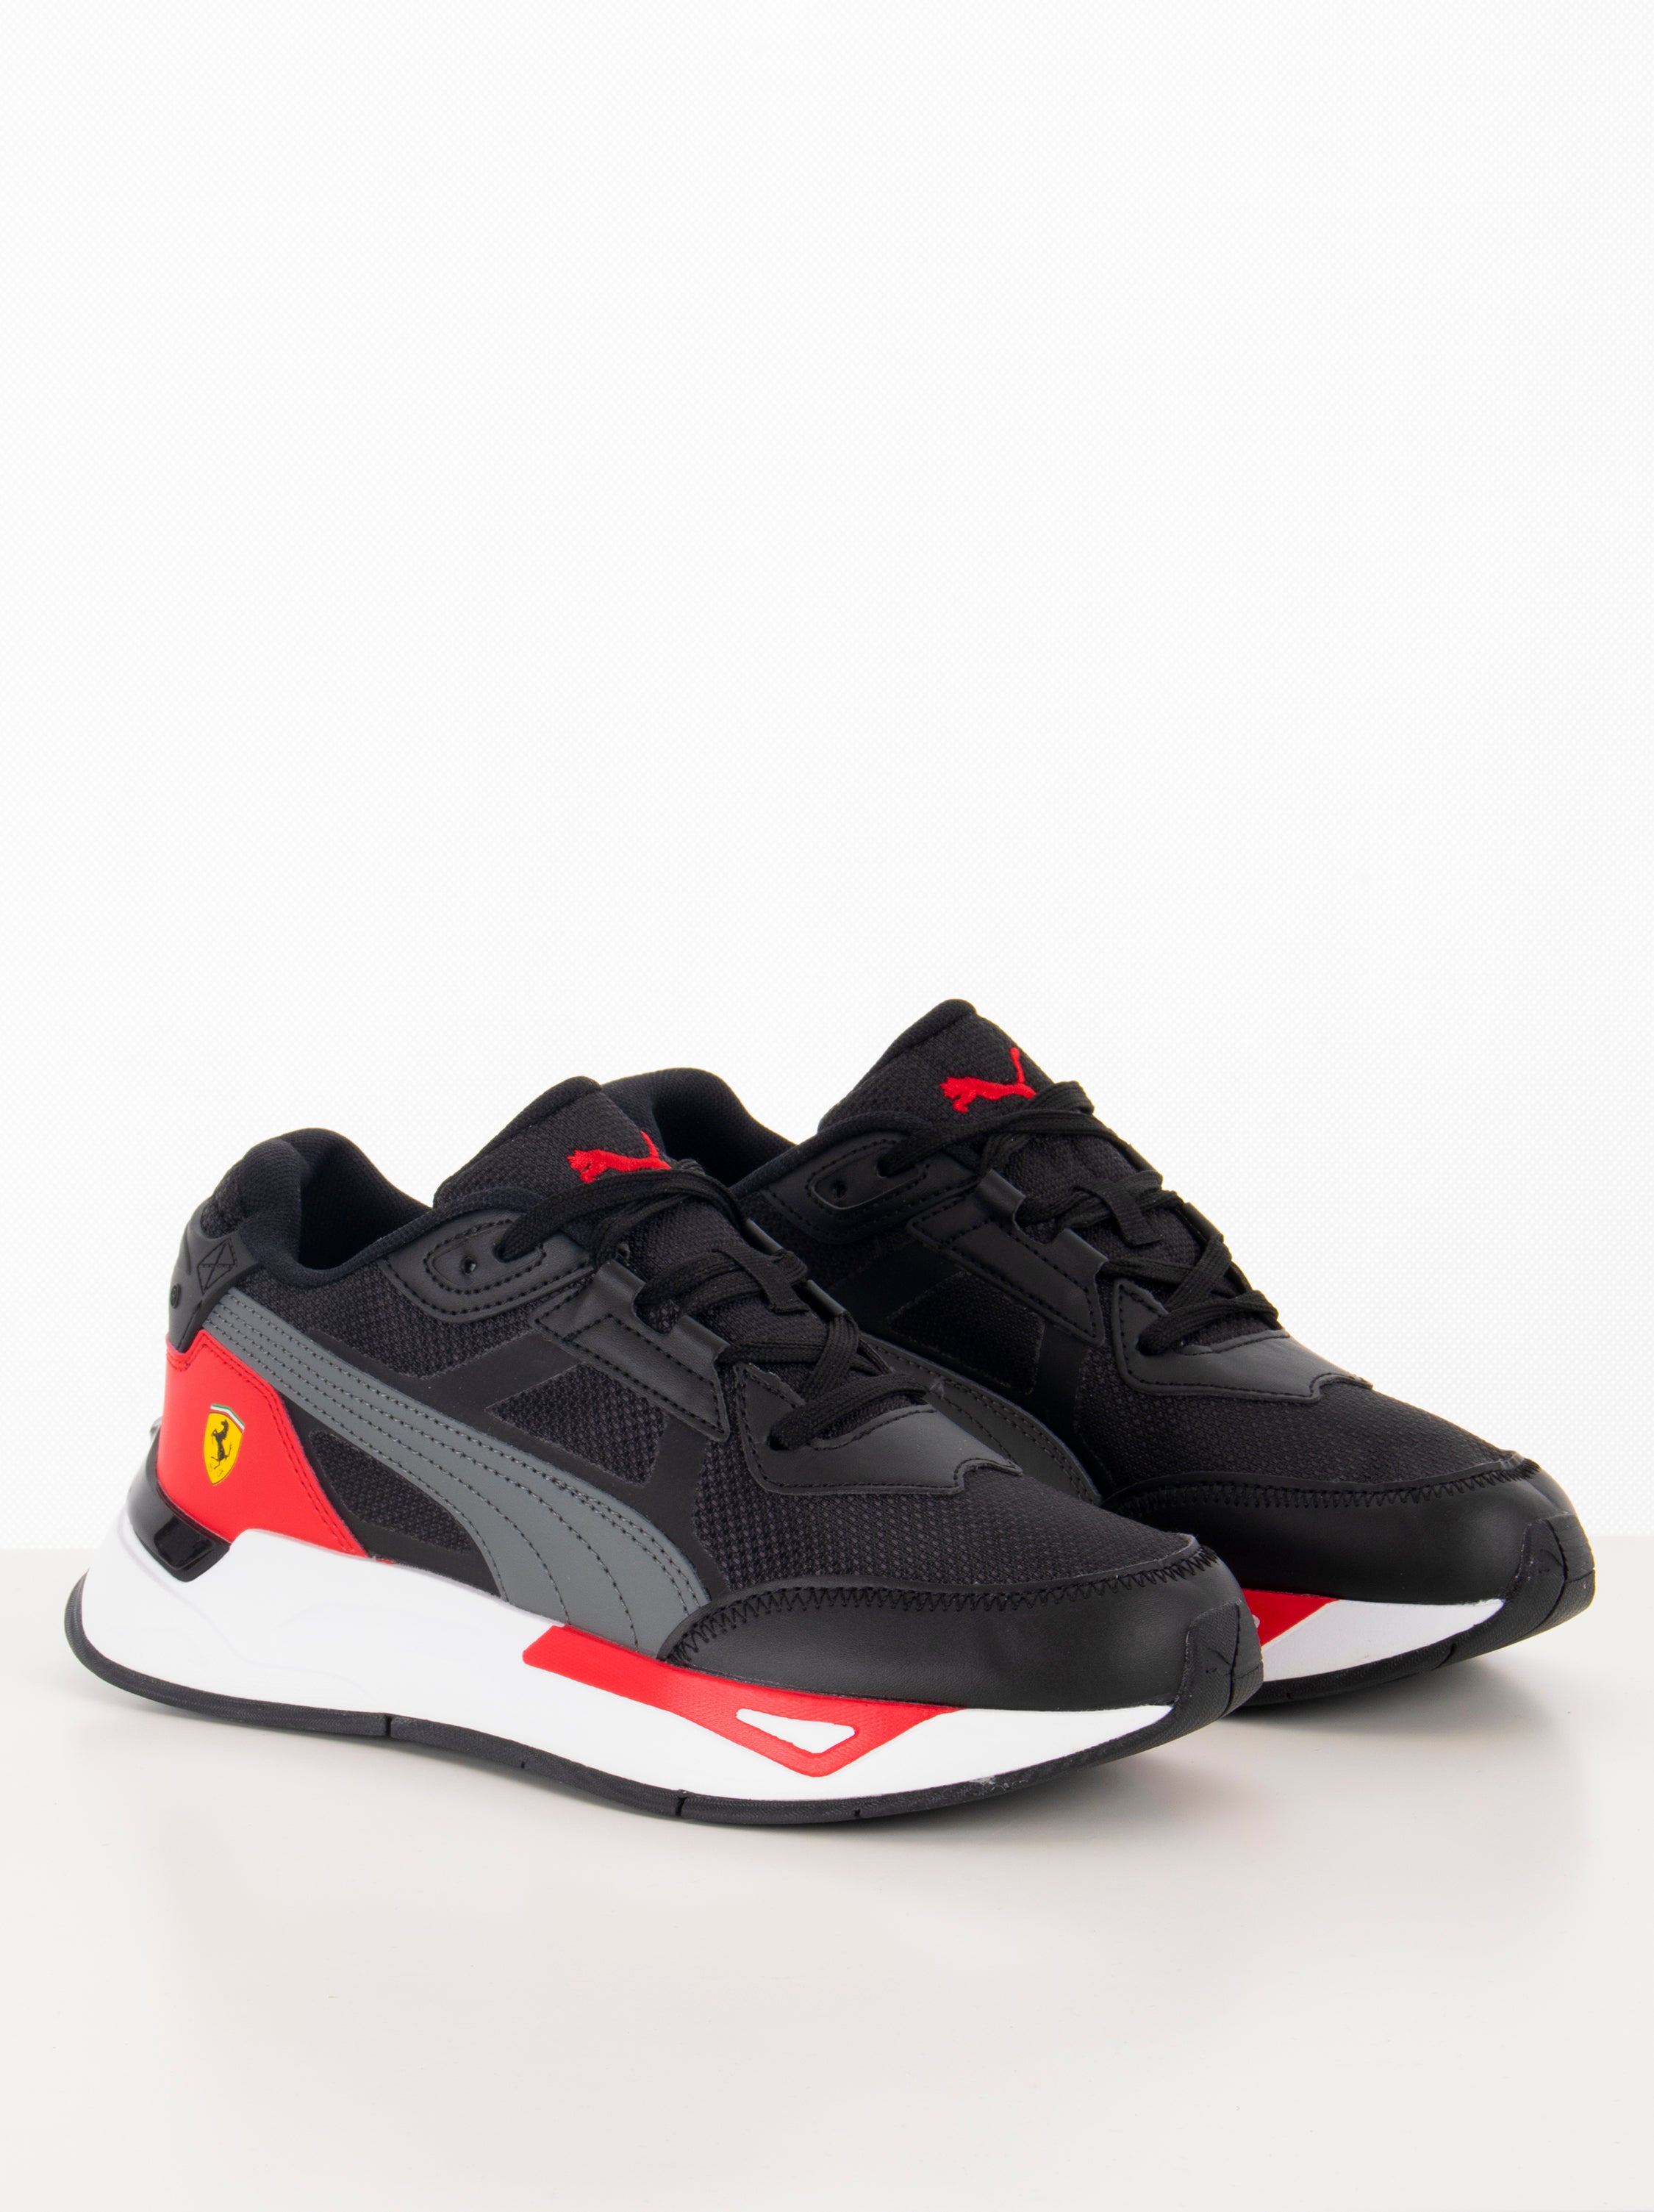 Puma Ferrari Black Sneakers